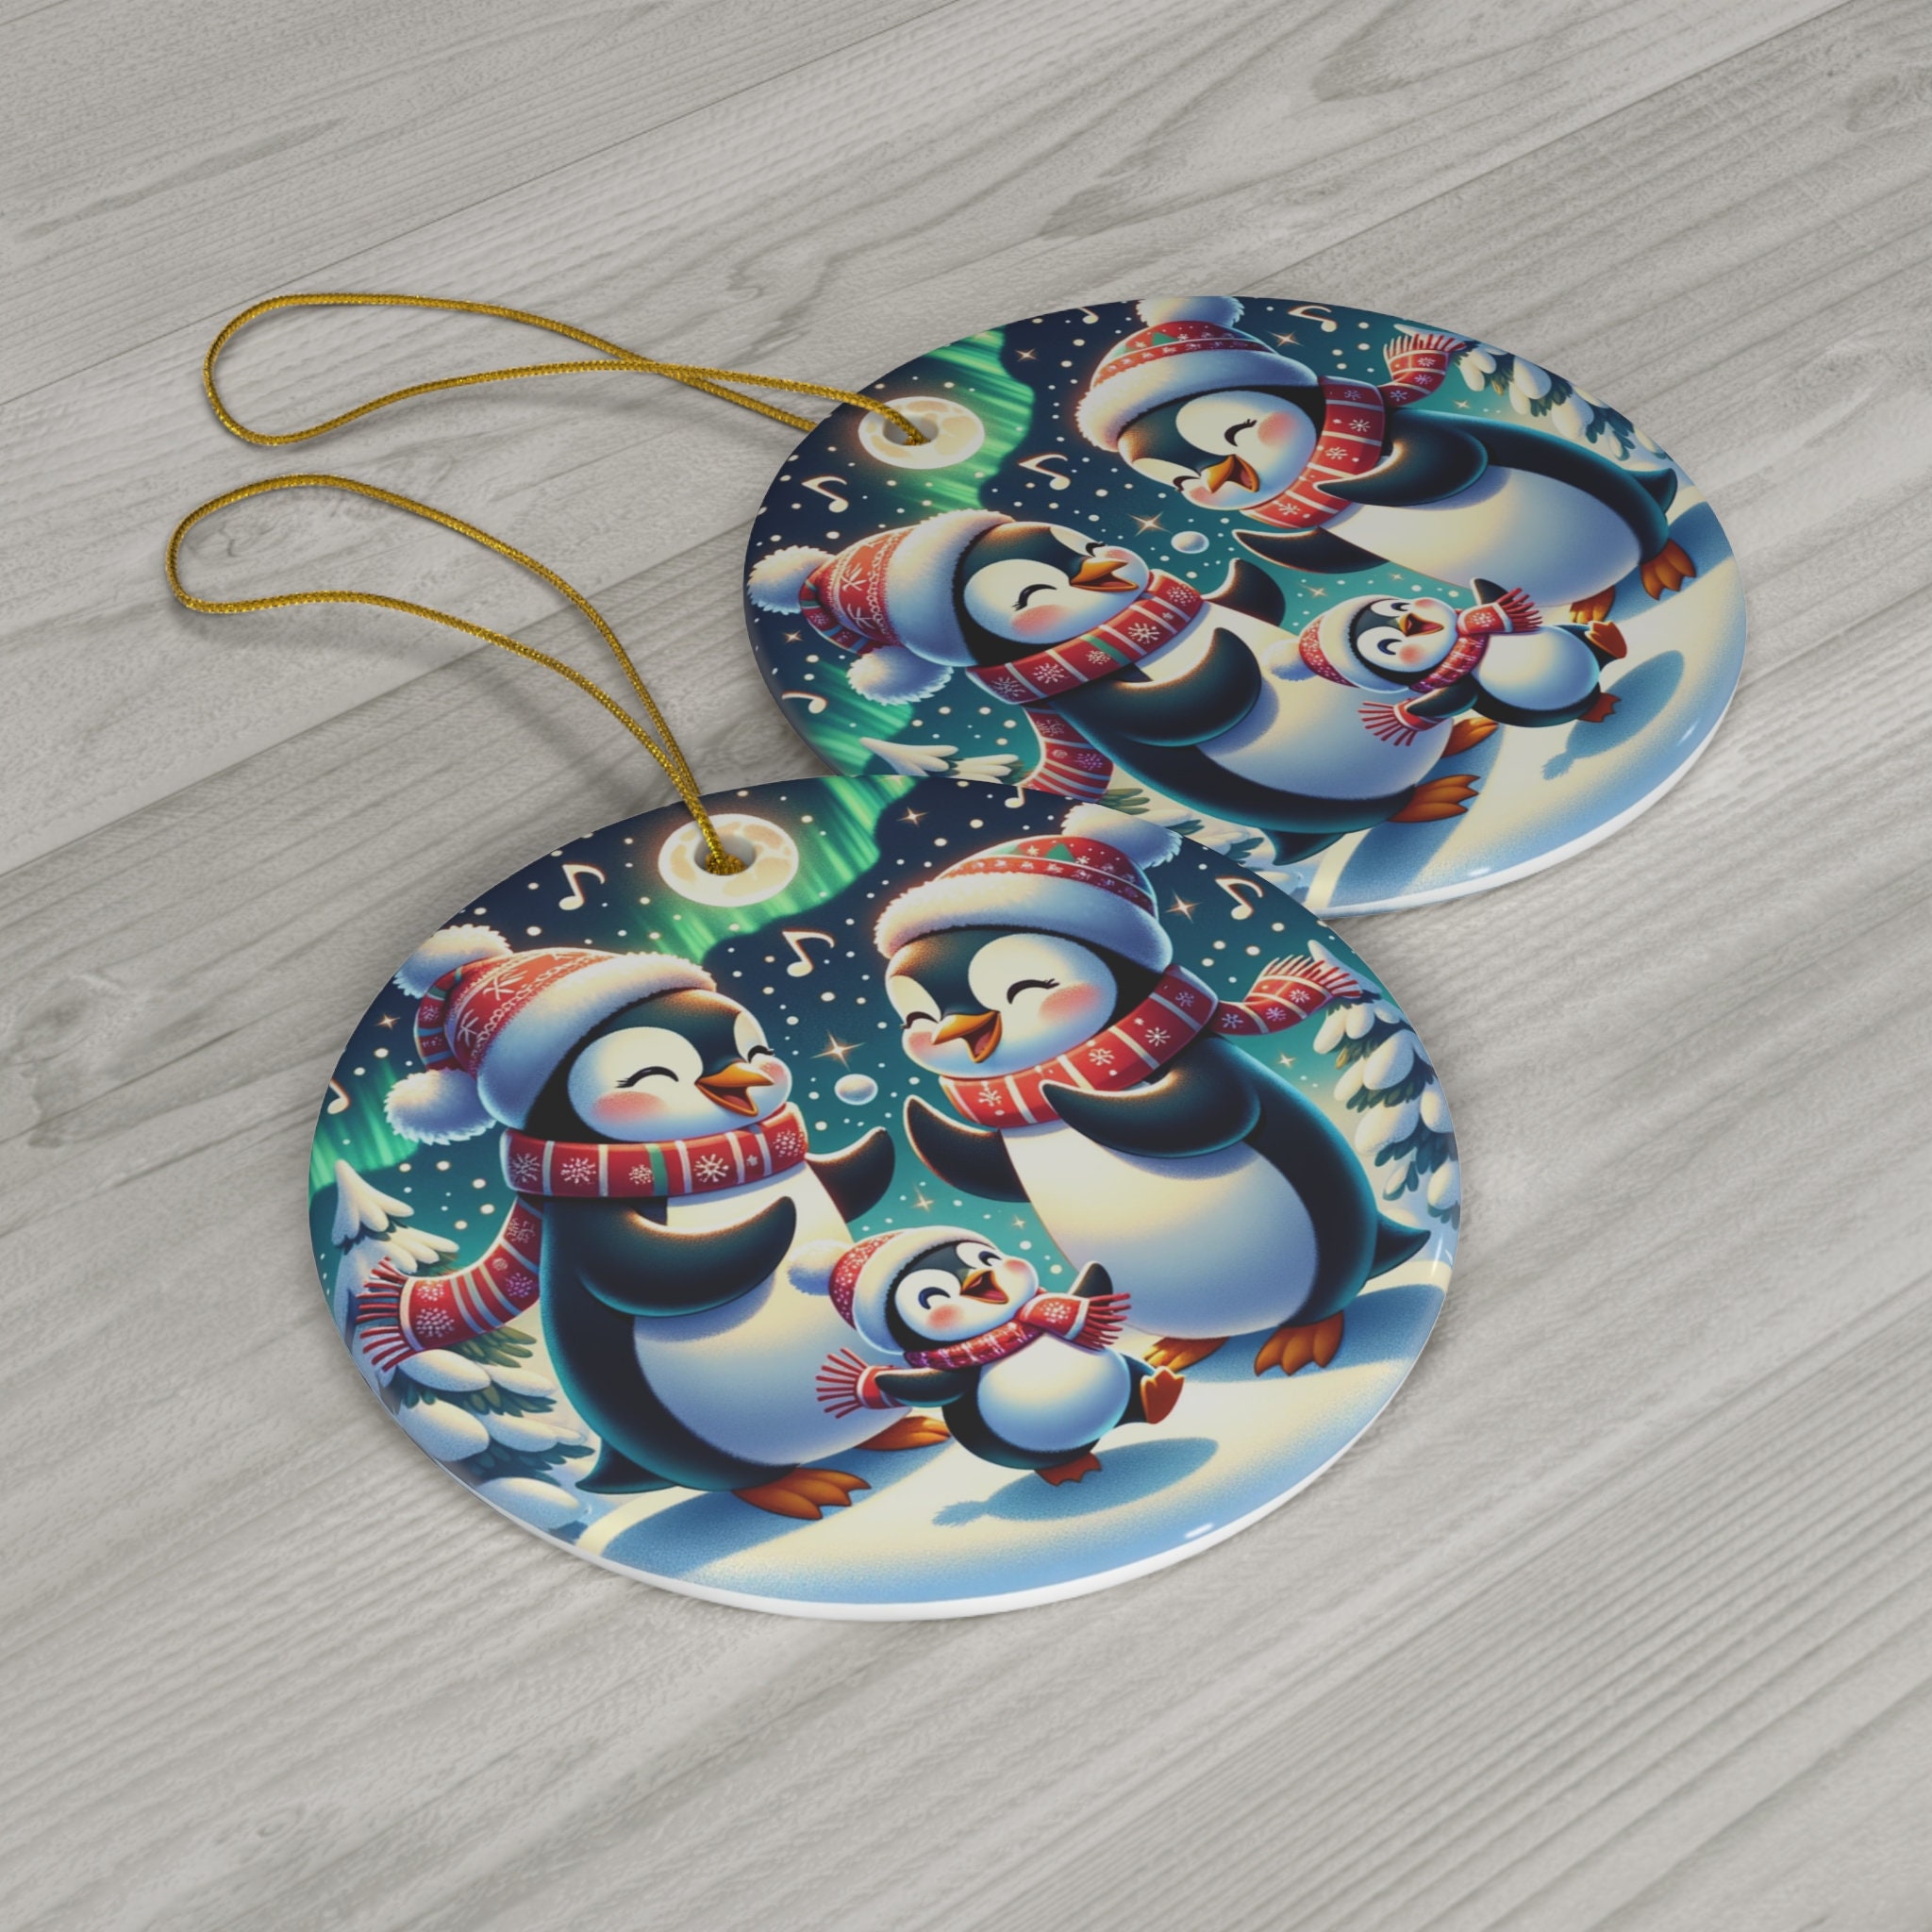 Discover Penguin Family Festive Ornament